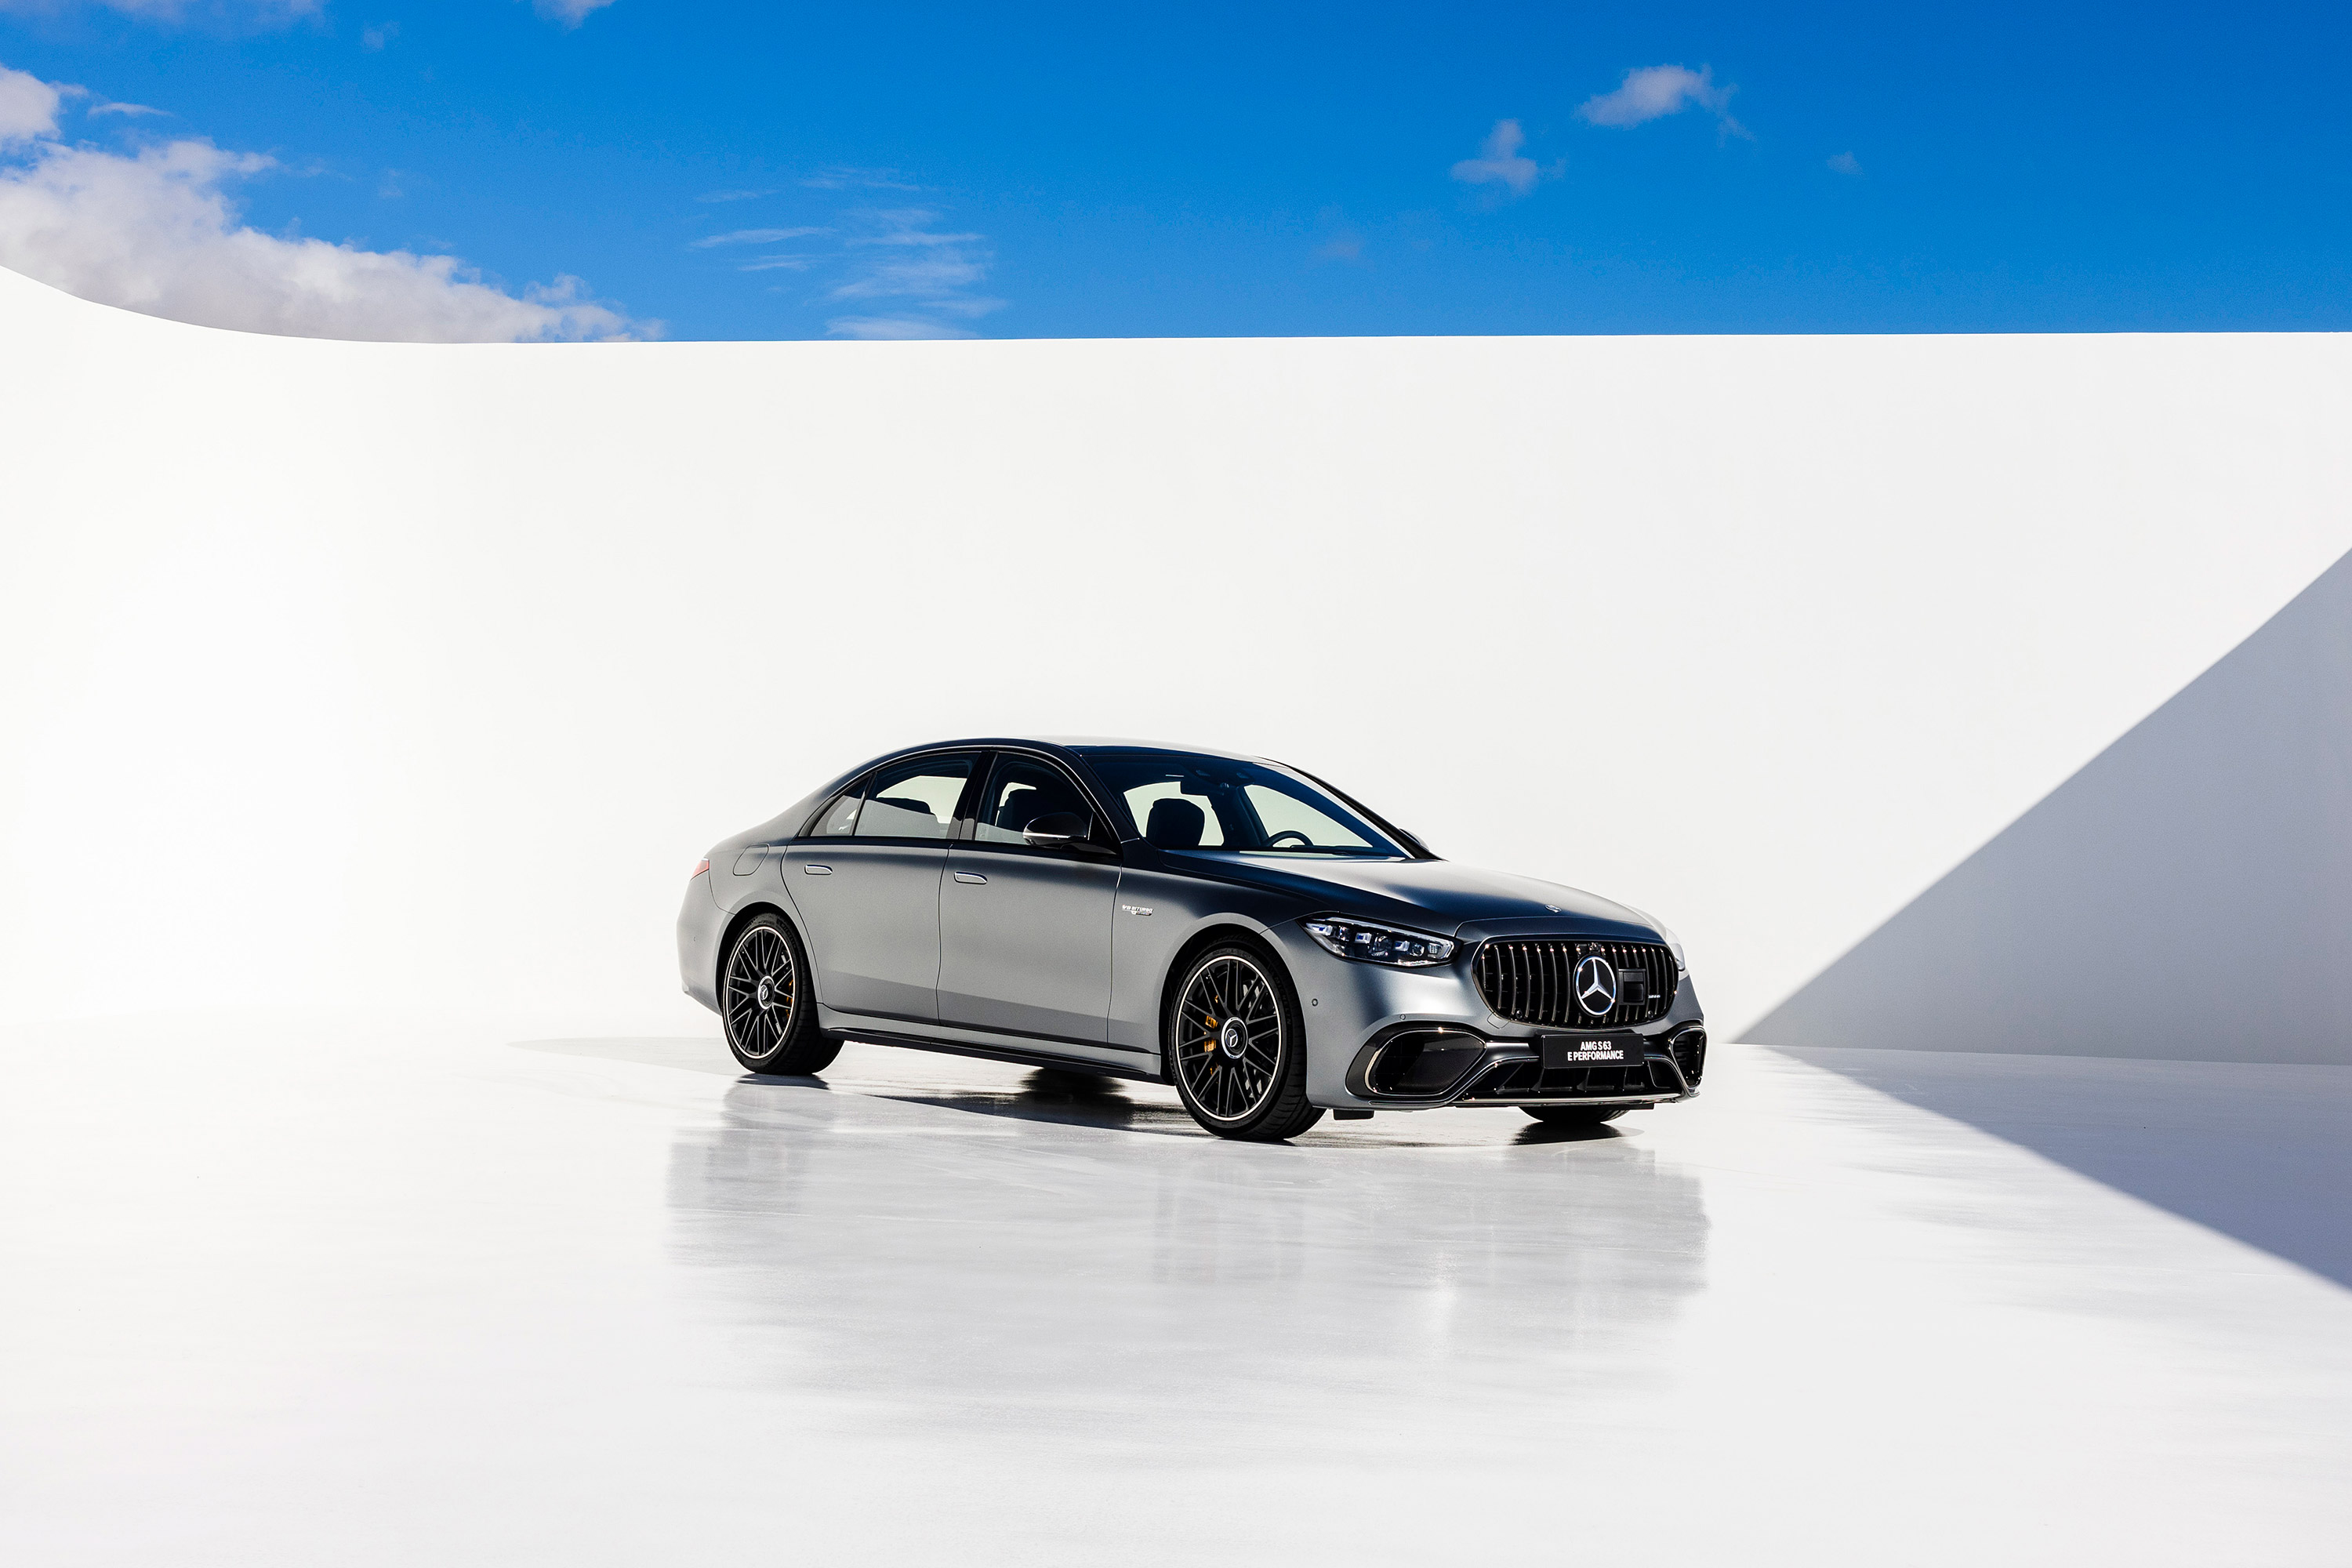  2023 Mercedes-AMG S63 E Performance Wallpaper.